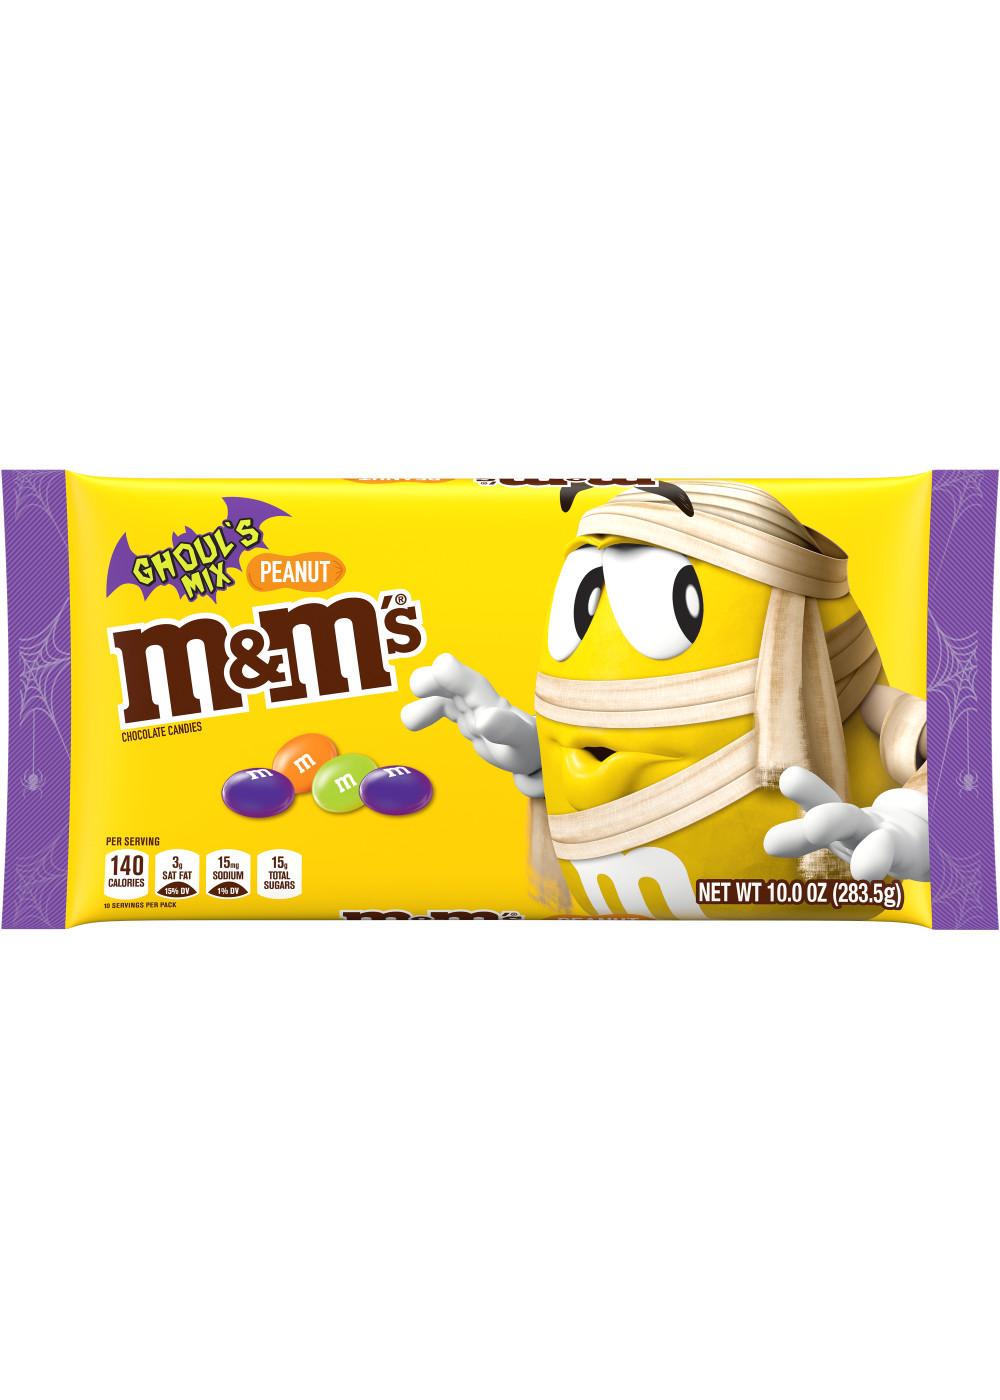 Peanut M&M'S Green Candy